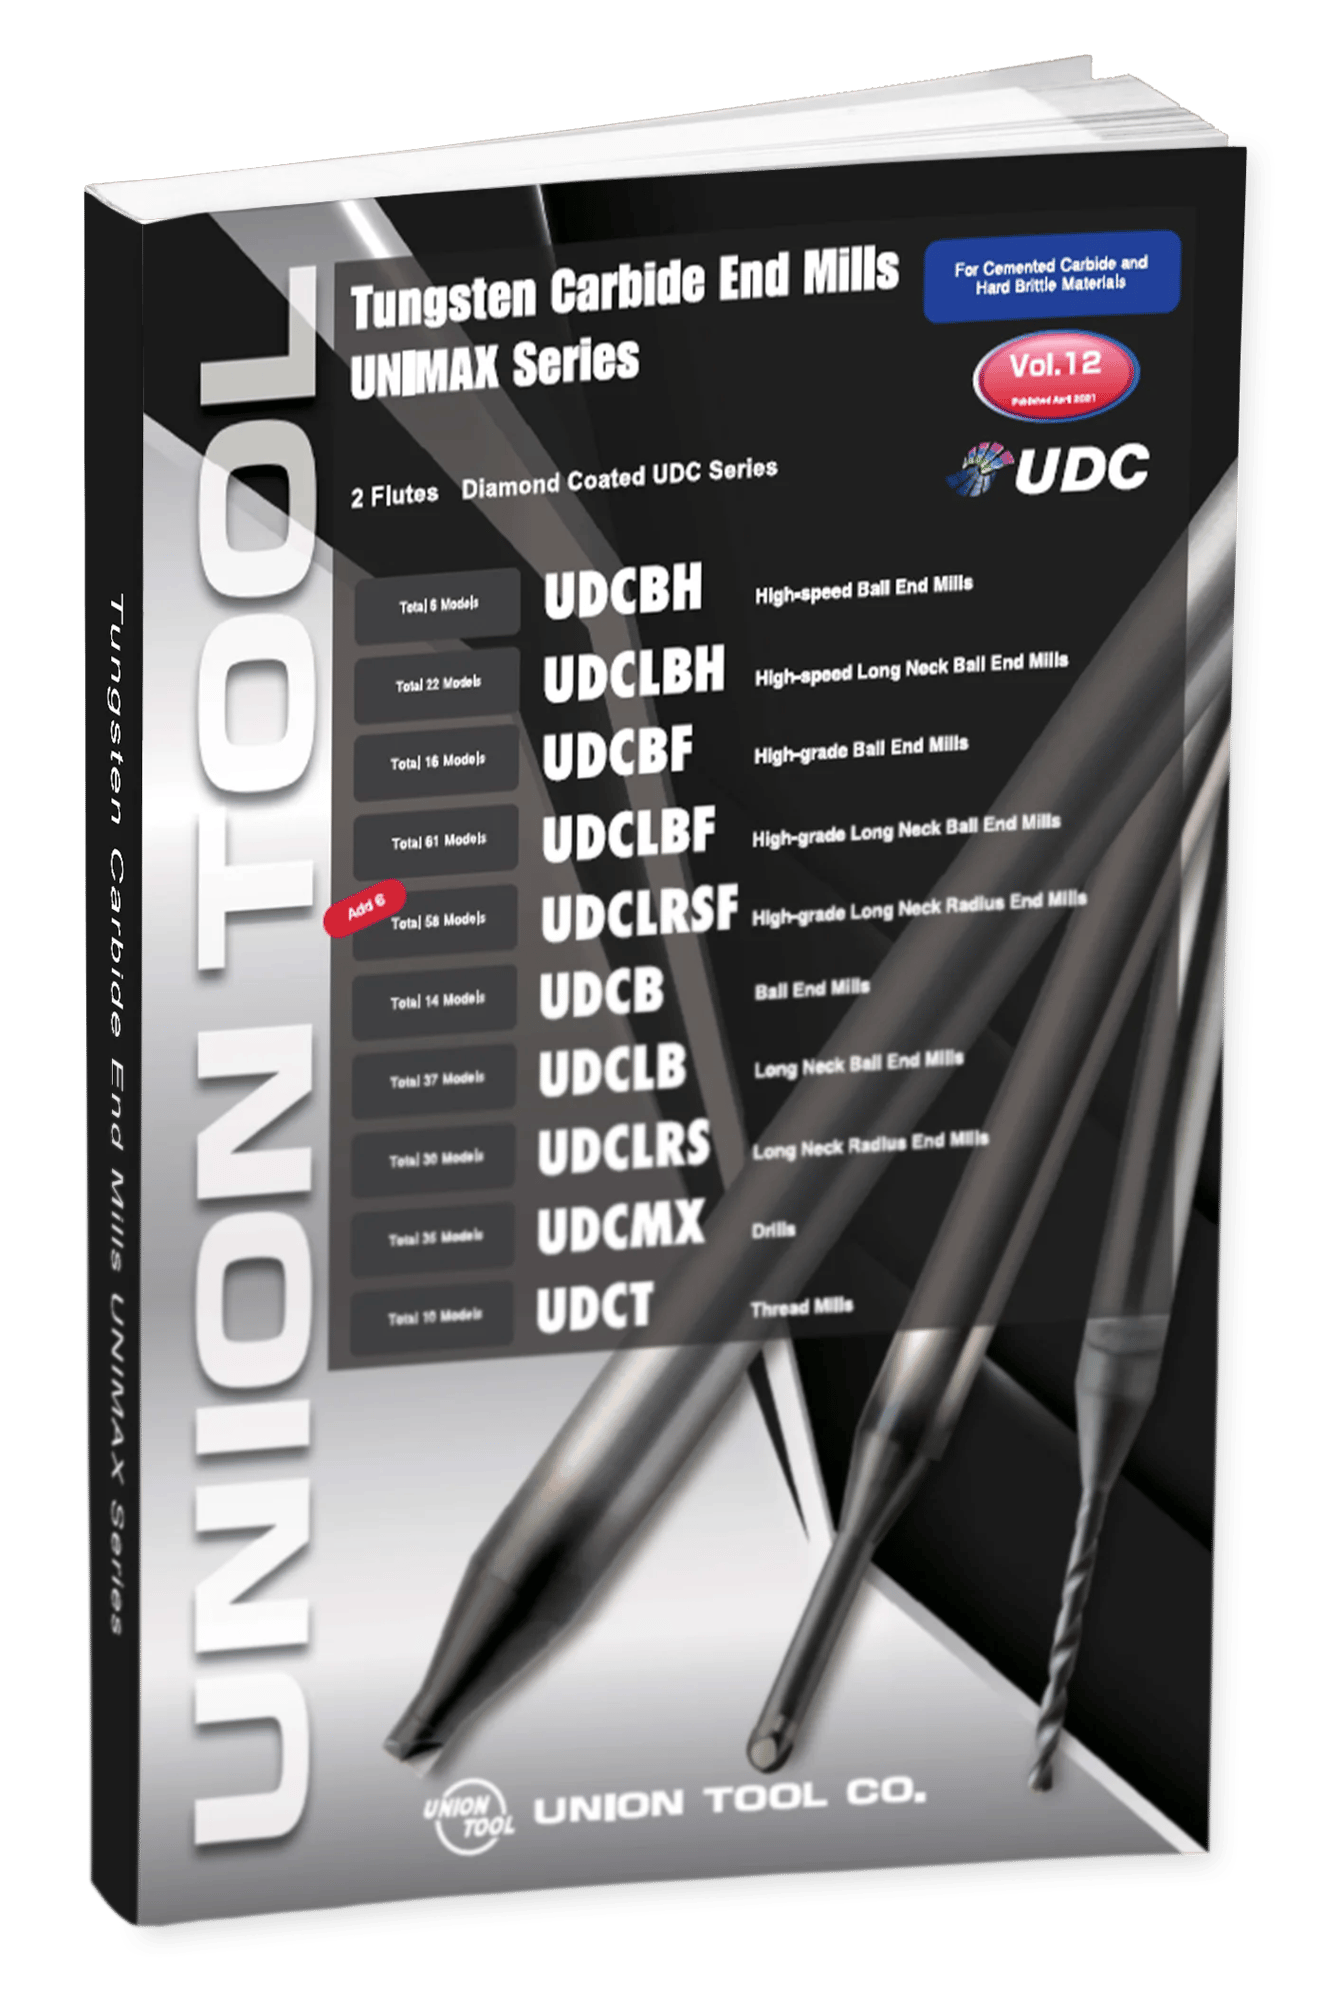 UDC Volume 12